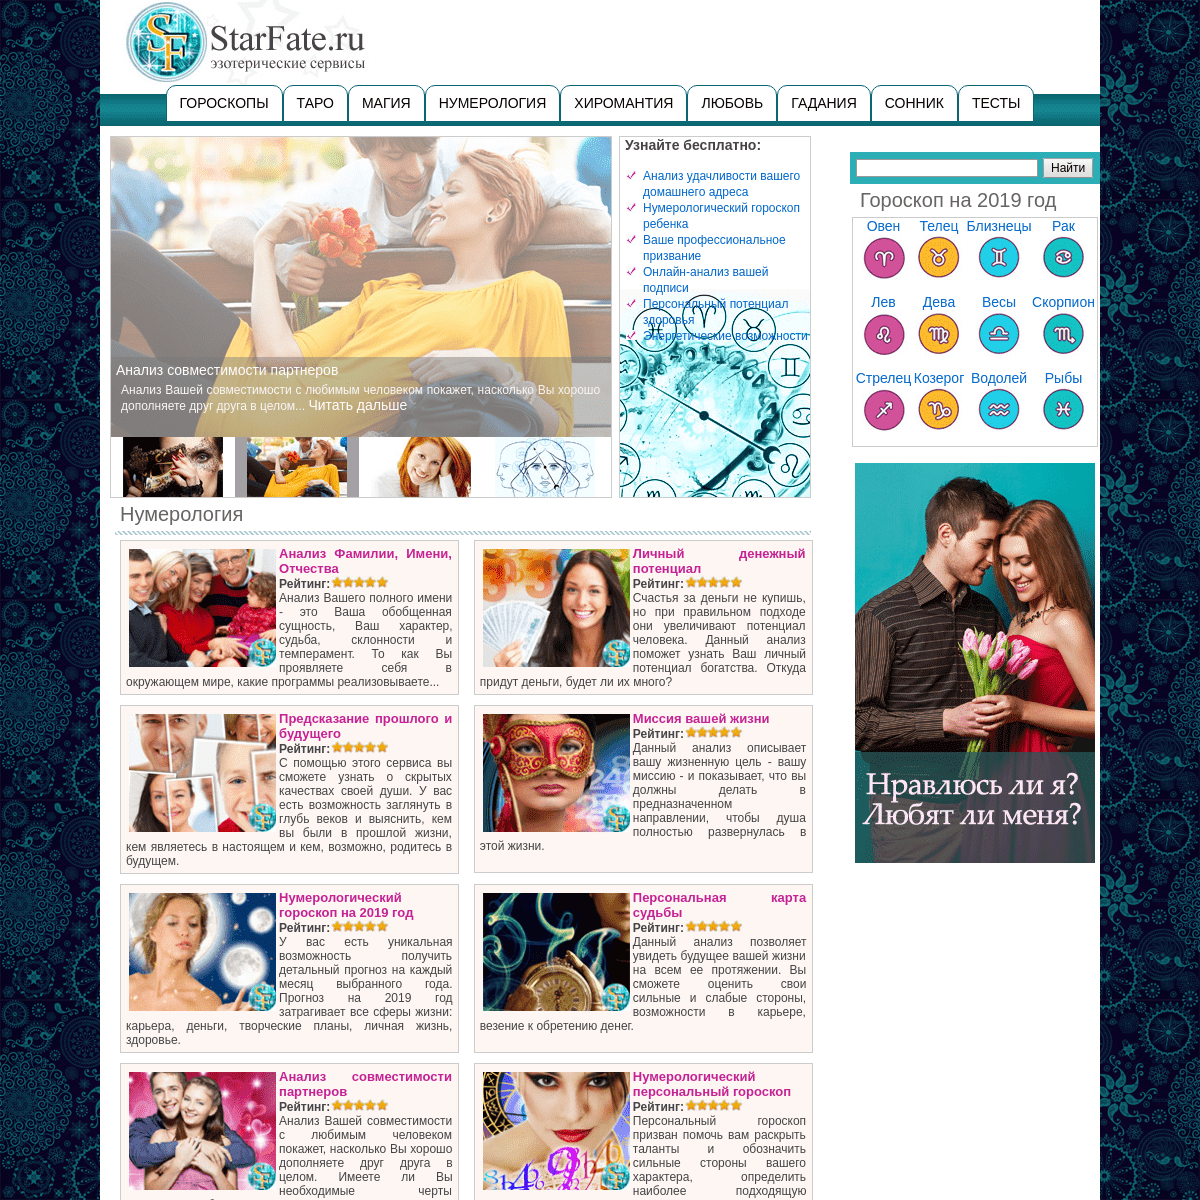 STARFATE.ru - астрологические и эзотерические онлайн сервисы